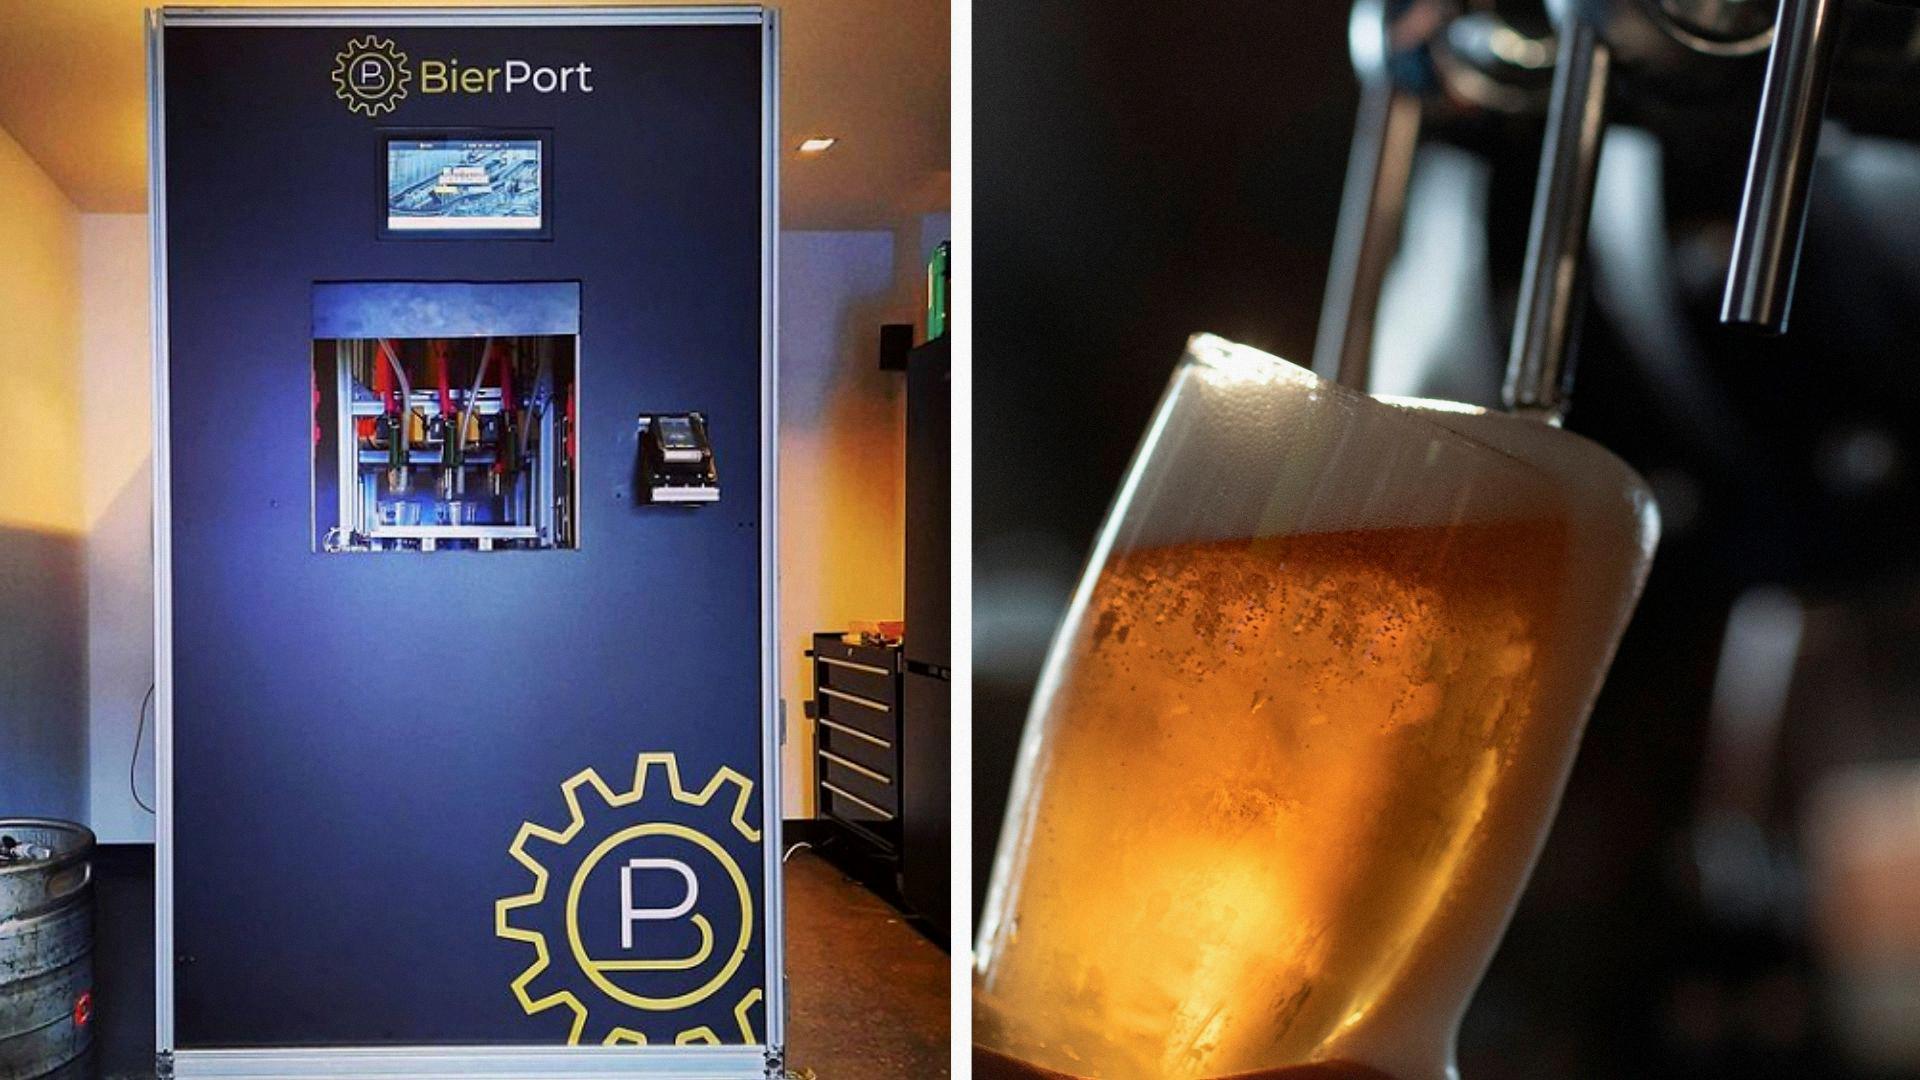 beer vending machine